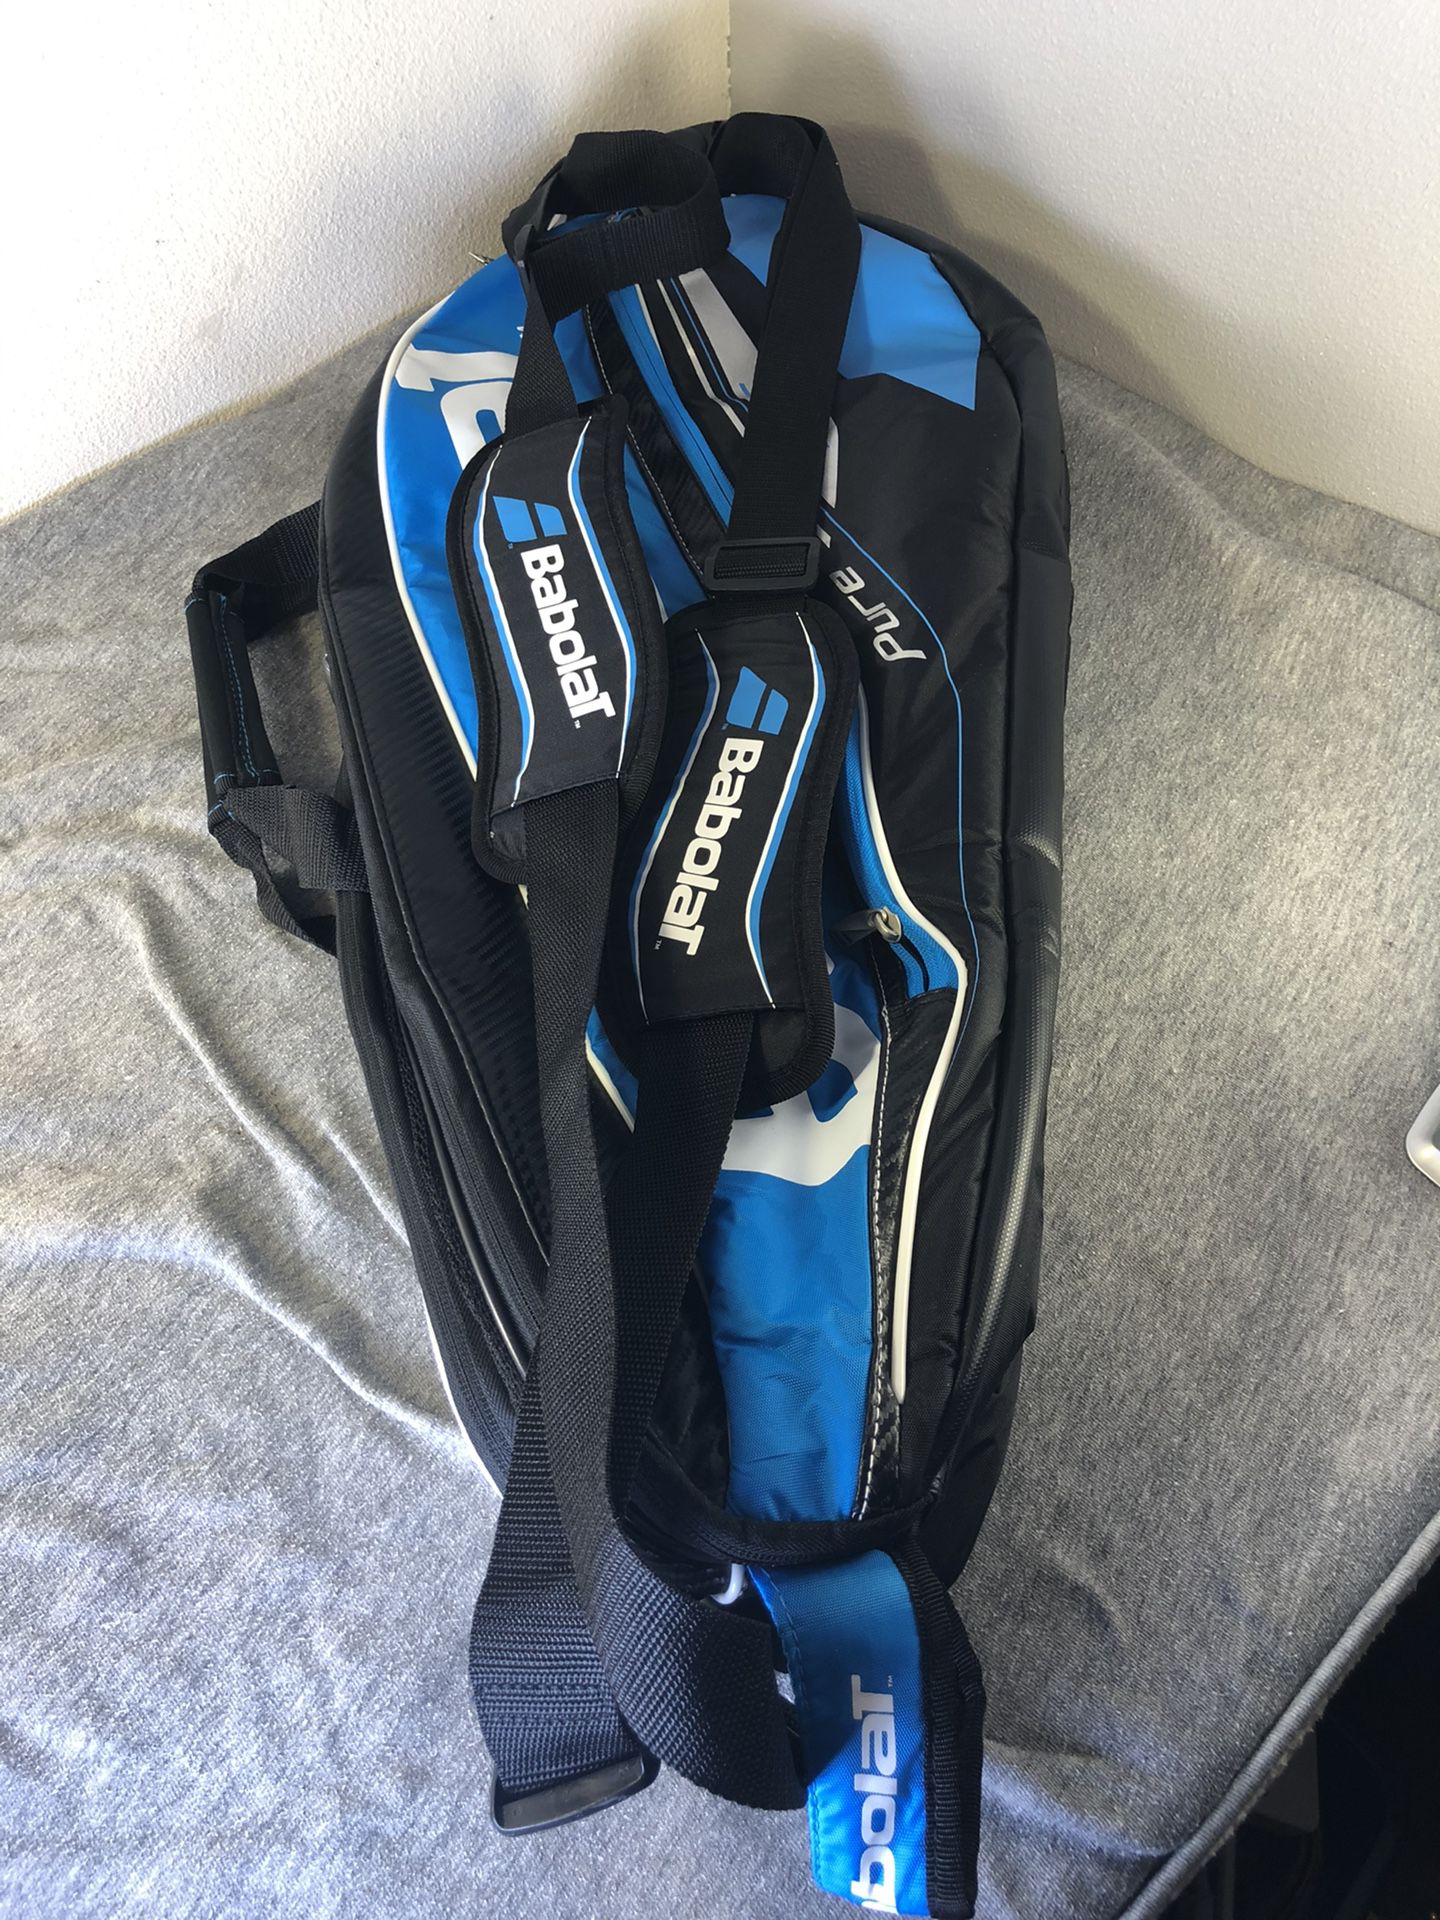 Still Available: New Babolat Pure Drive Tennis Badminton Bag RHX6 Blue Racket Racquet Shoes 751106